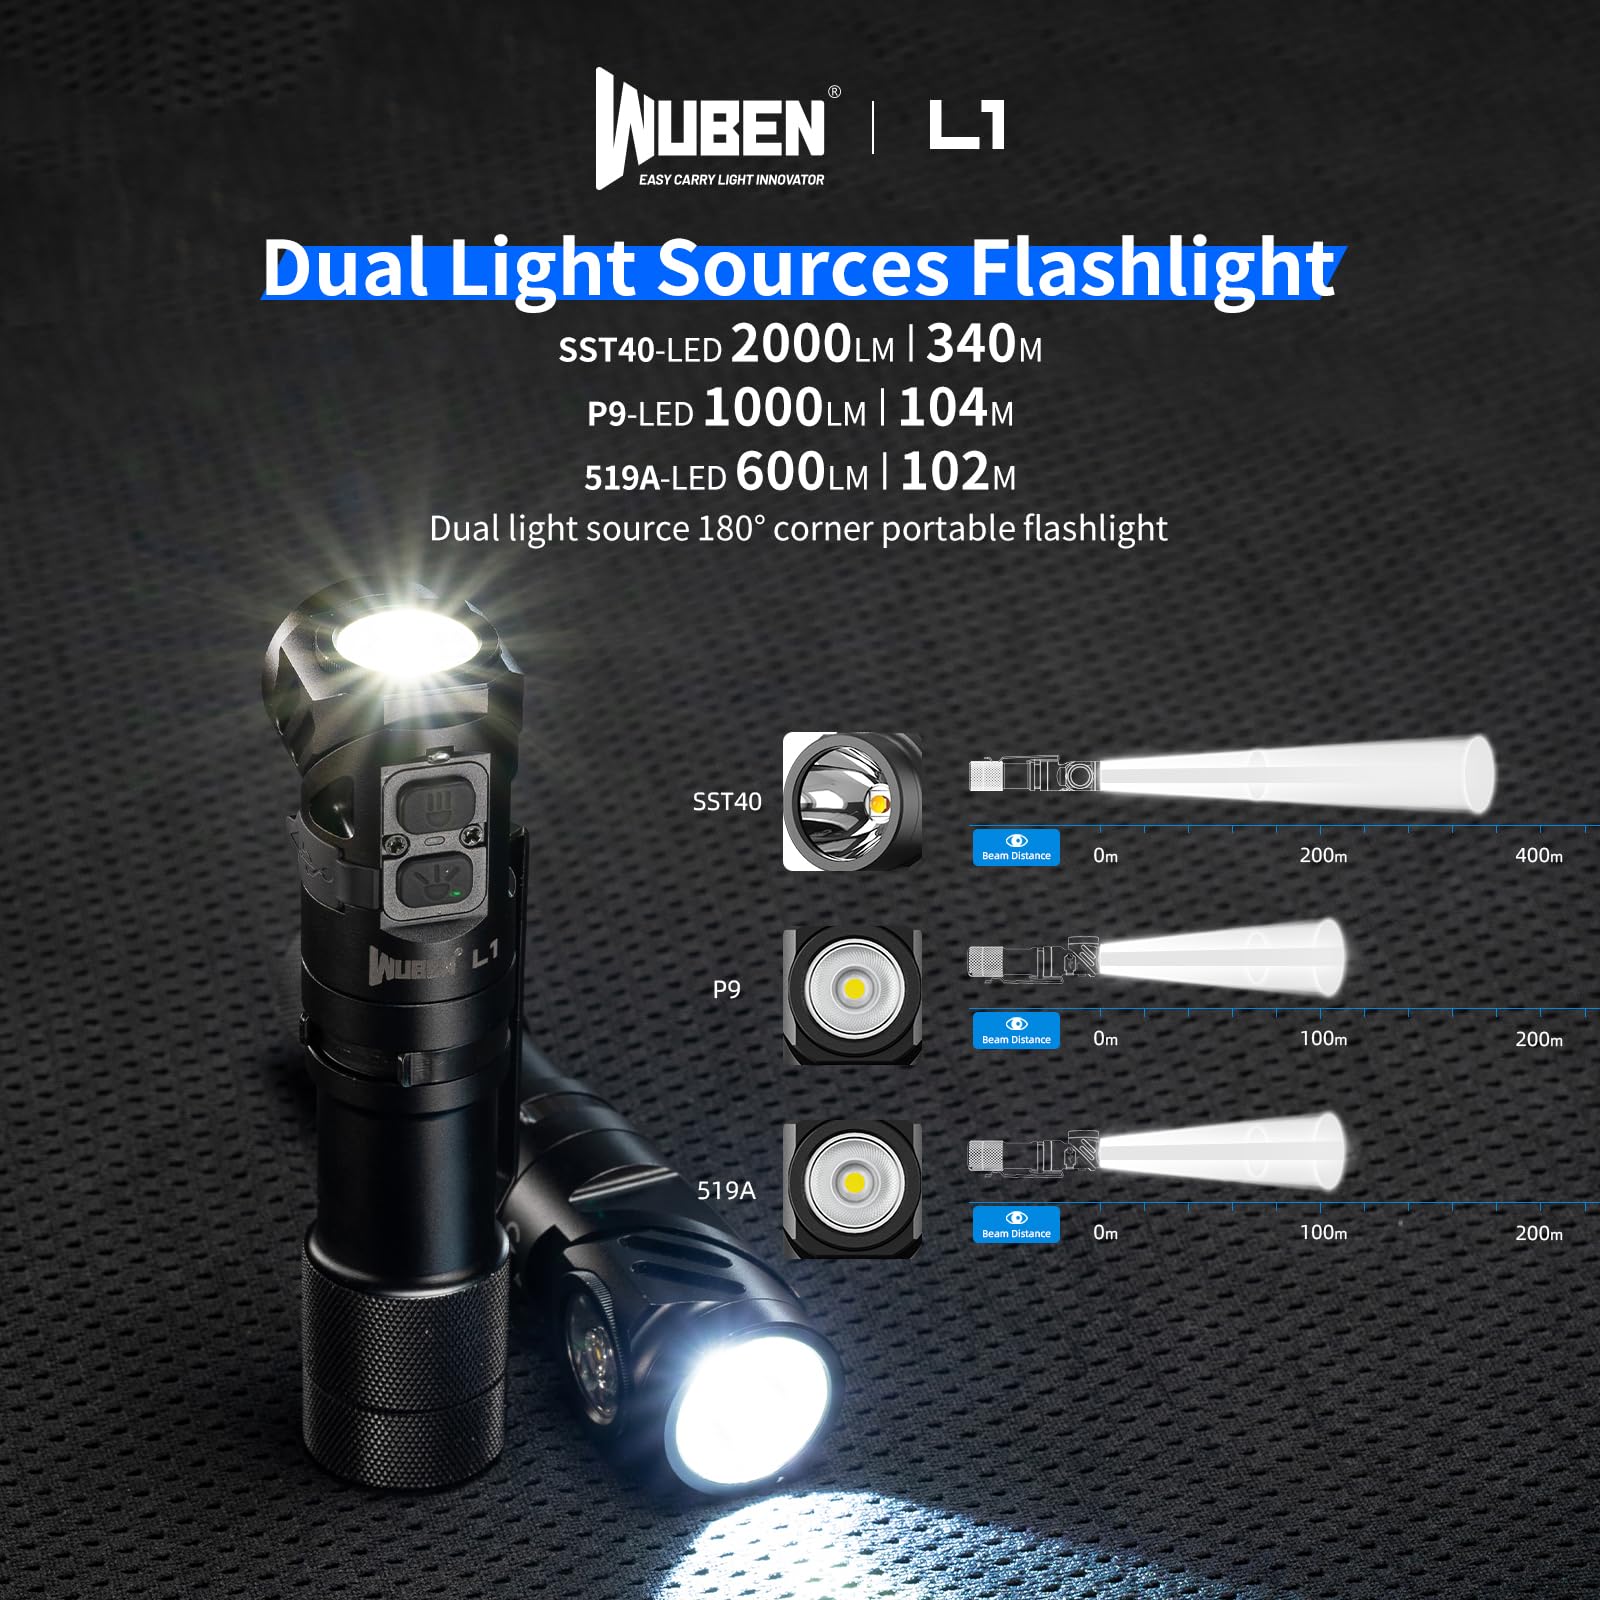 WUBEN L1 Flashlight Rechargeable Led Flashlights High Lumens 2000 Lumen Battery Powered, Super Bright Tactical Multifunctional IP68 Waterproof Powerful Handheld Flash Light for Emergencies Camping